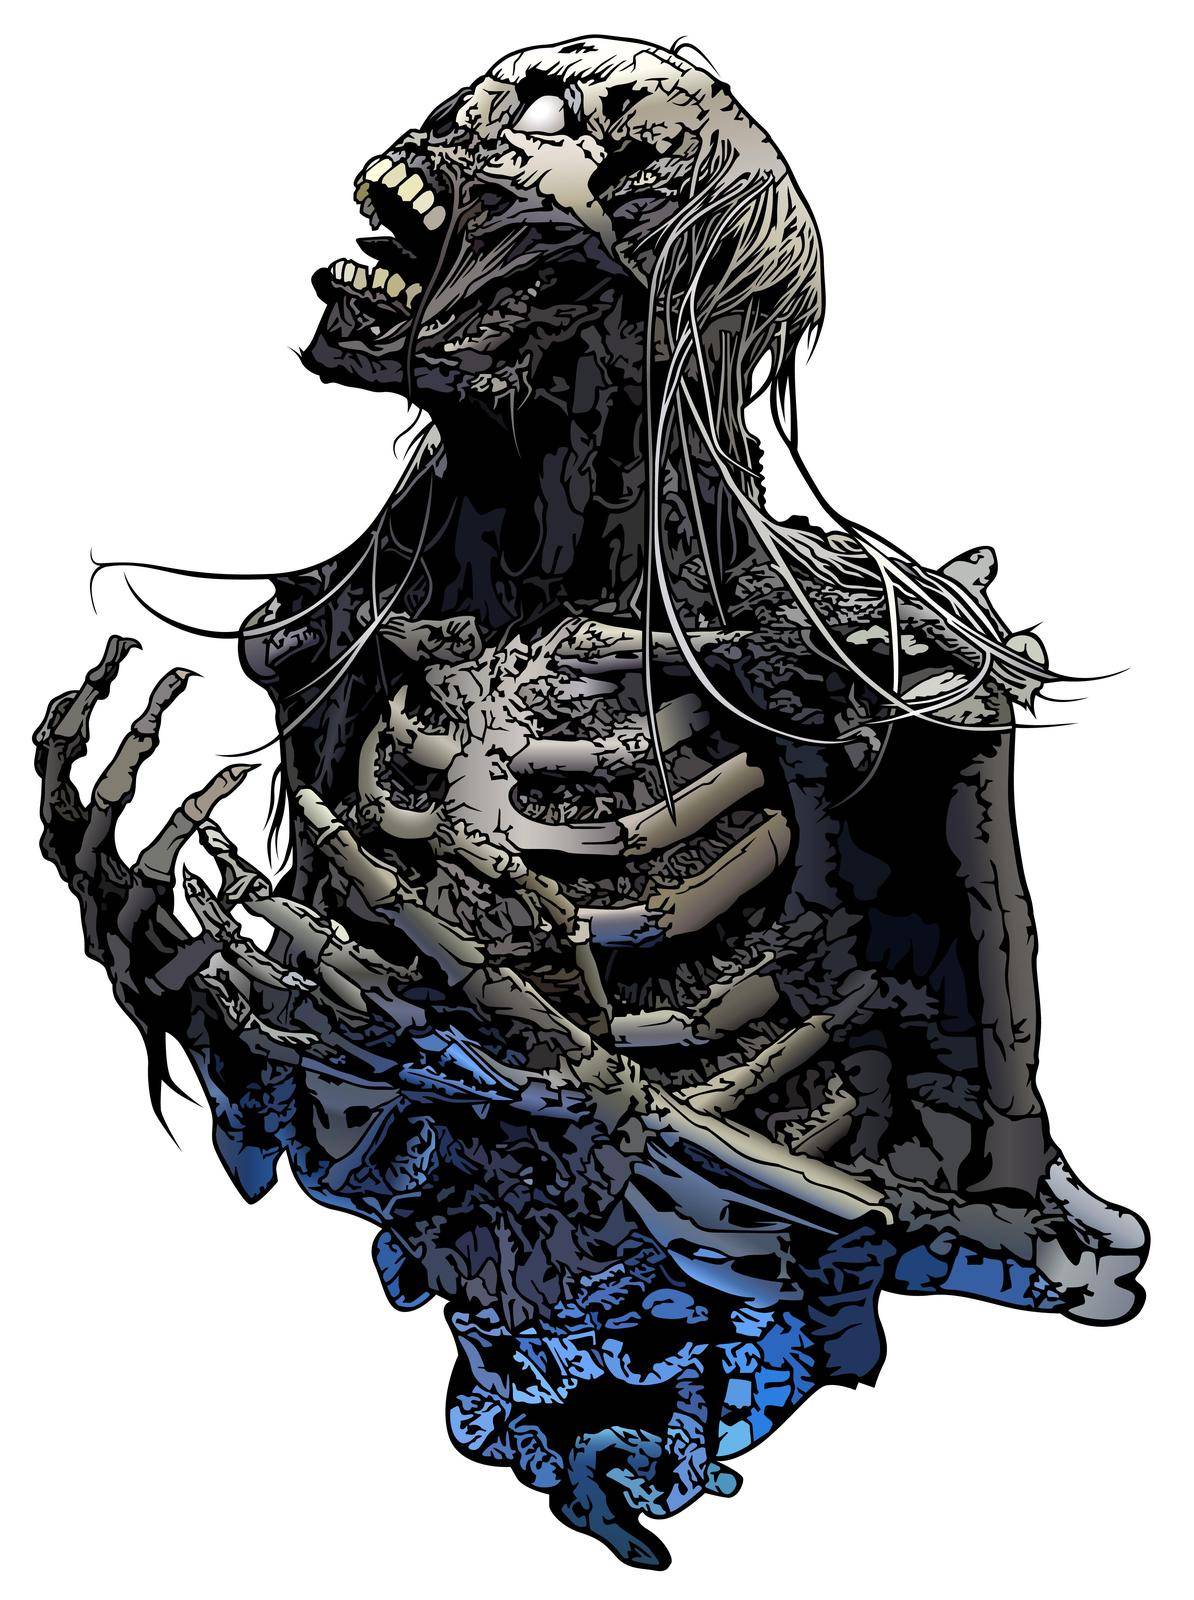 Horror Skeleton Illustration by illustratorCZ